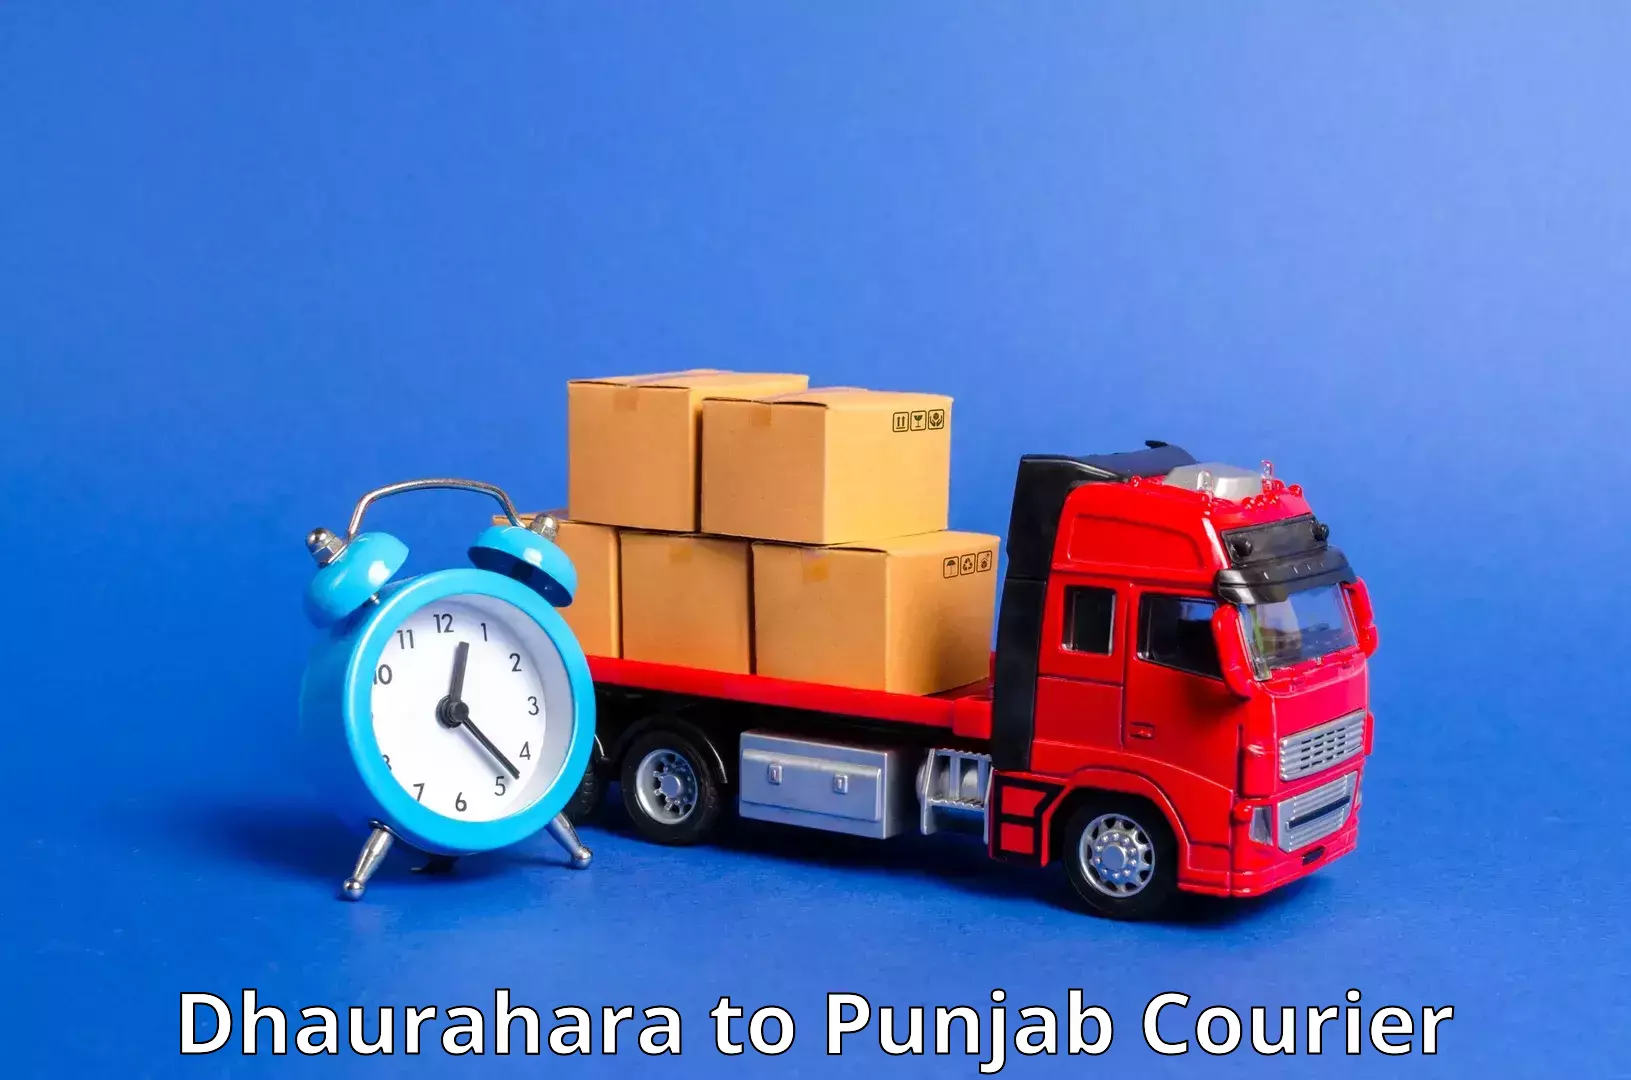 Global logistics network Dhaurahara to Punjab